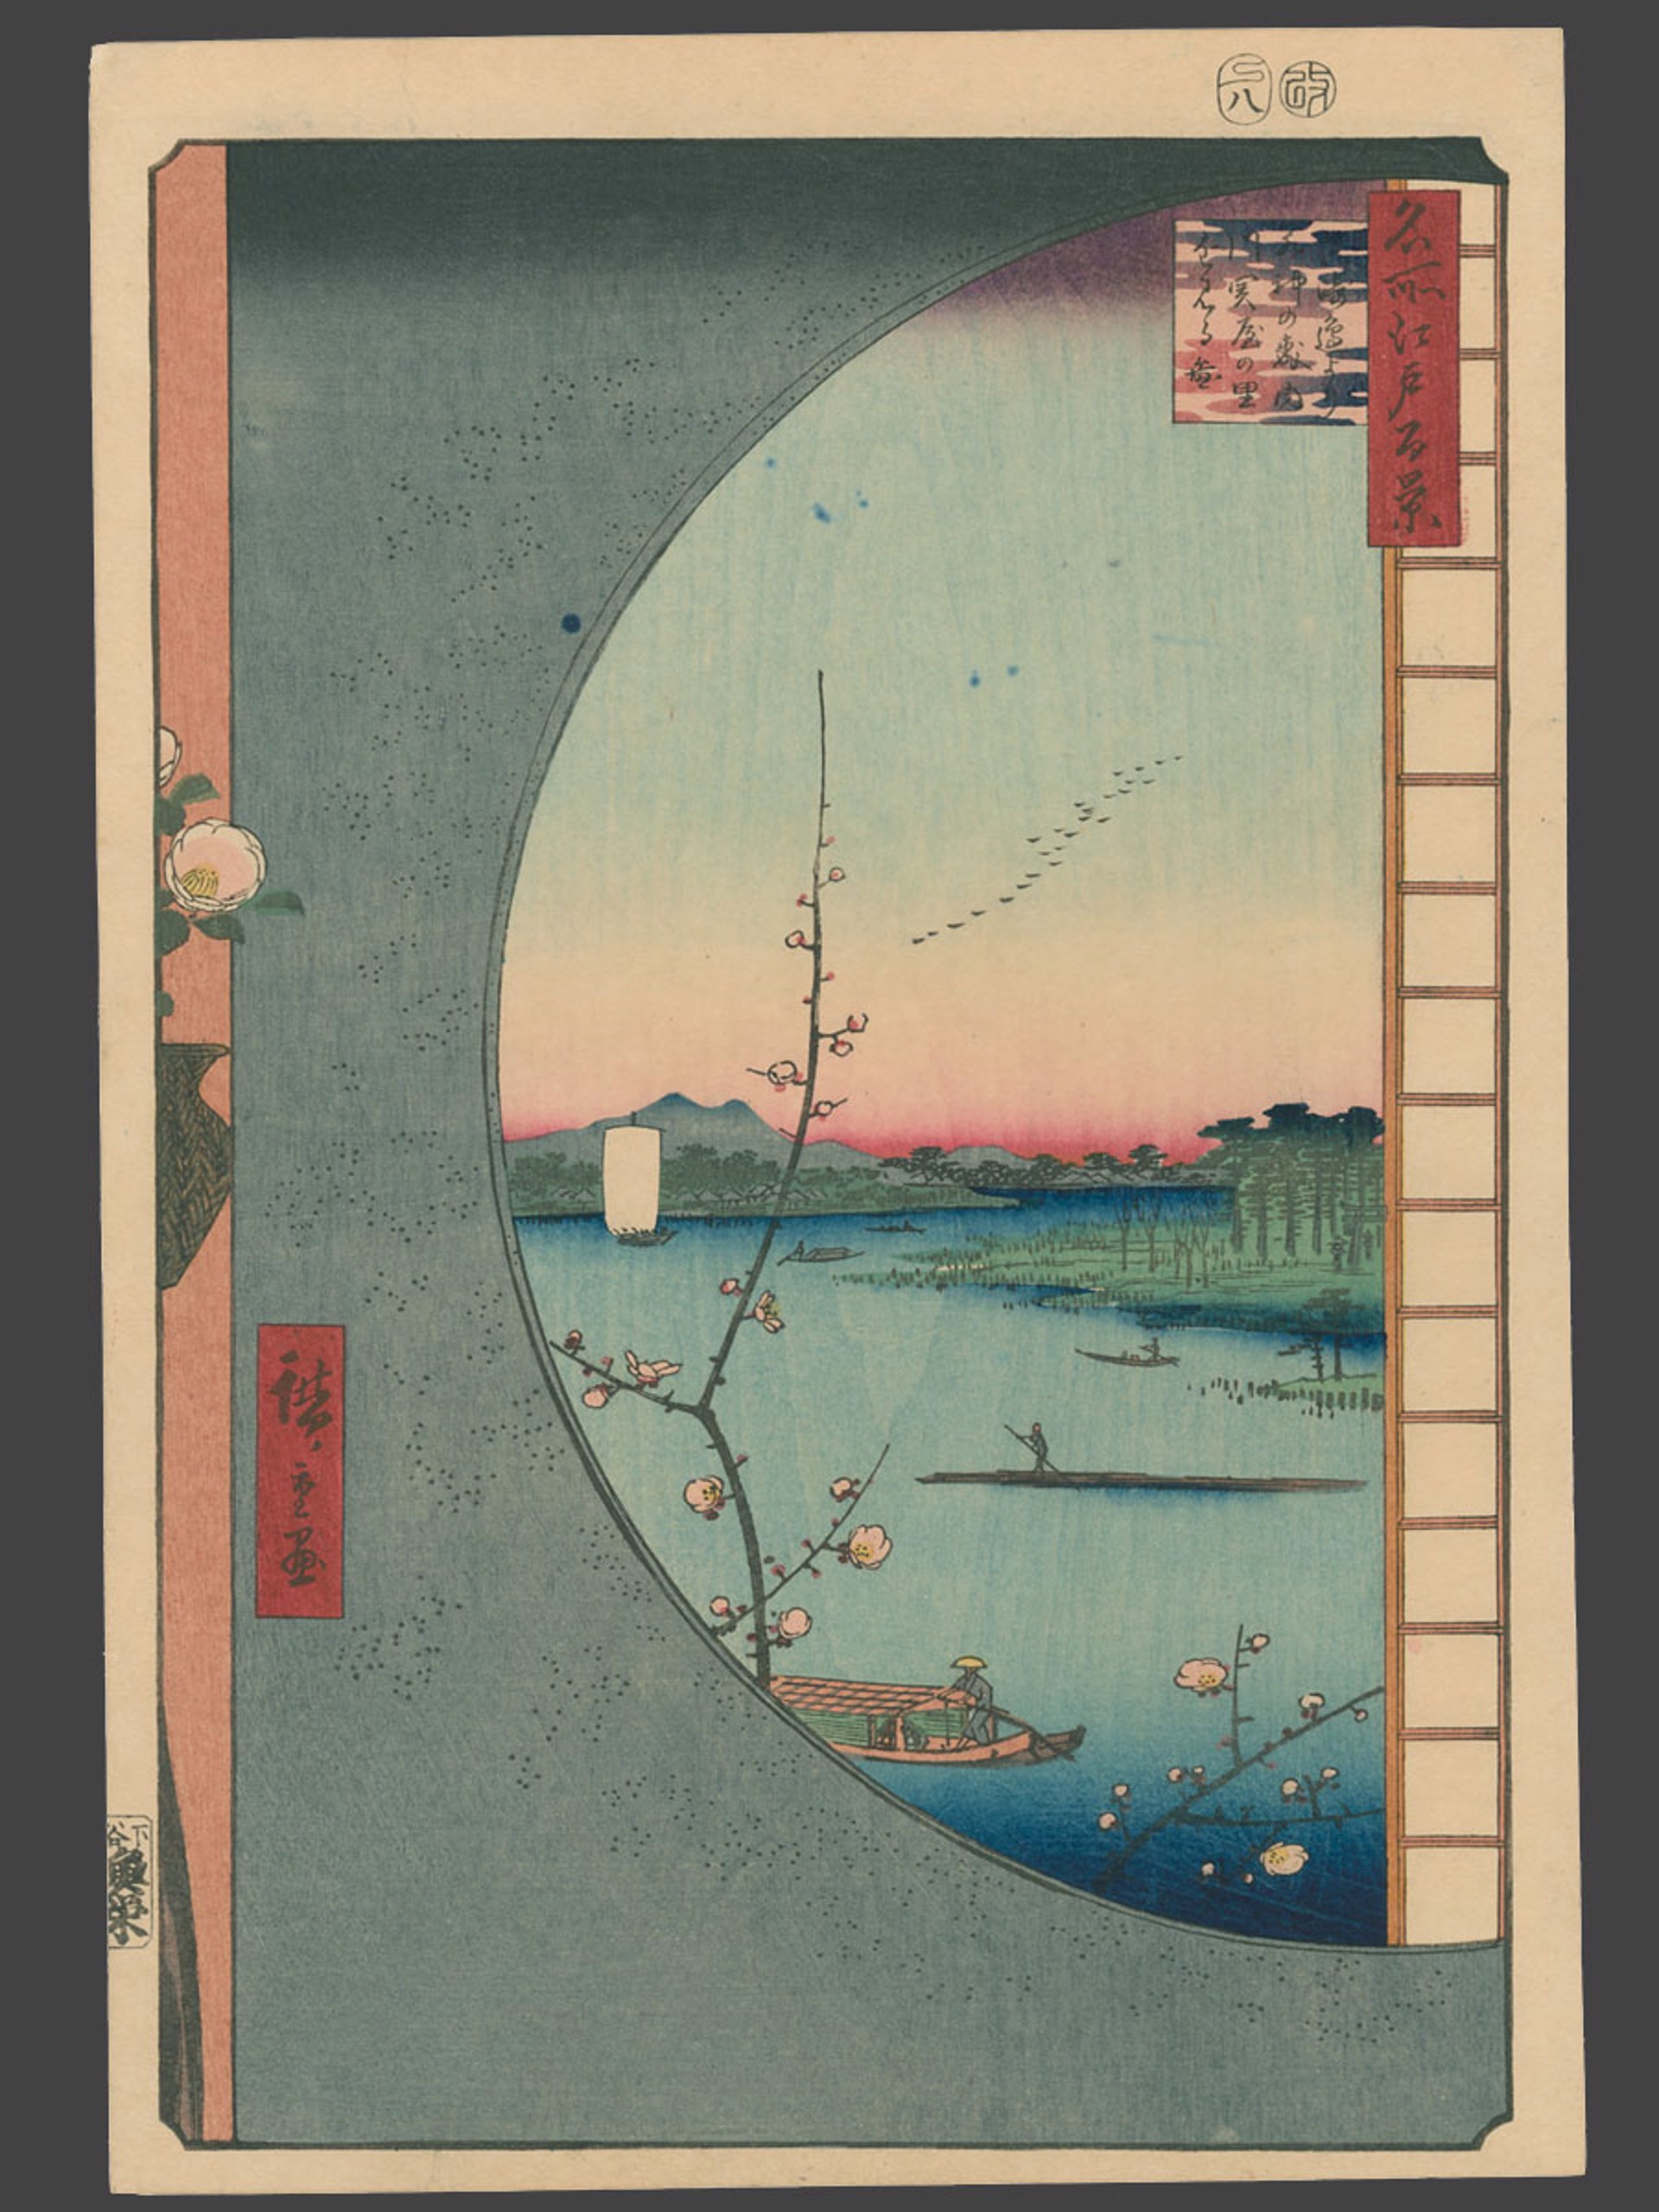 #36 - View of Suijin Grove from the Neighborhood Massaki 100 Views of Edo by Hiroshige